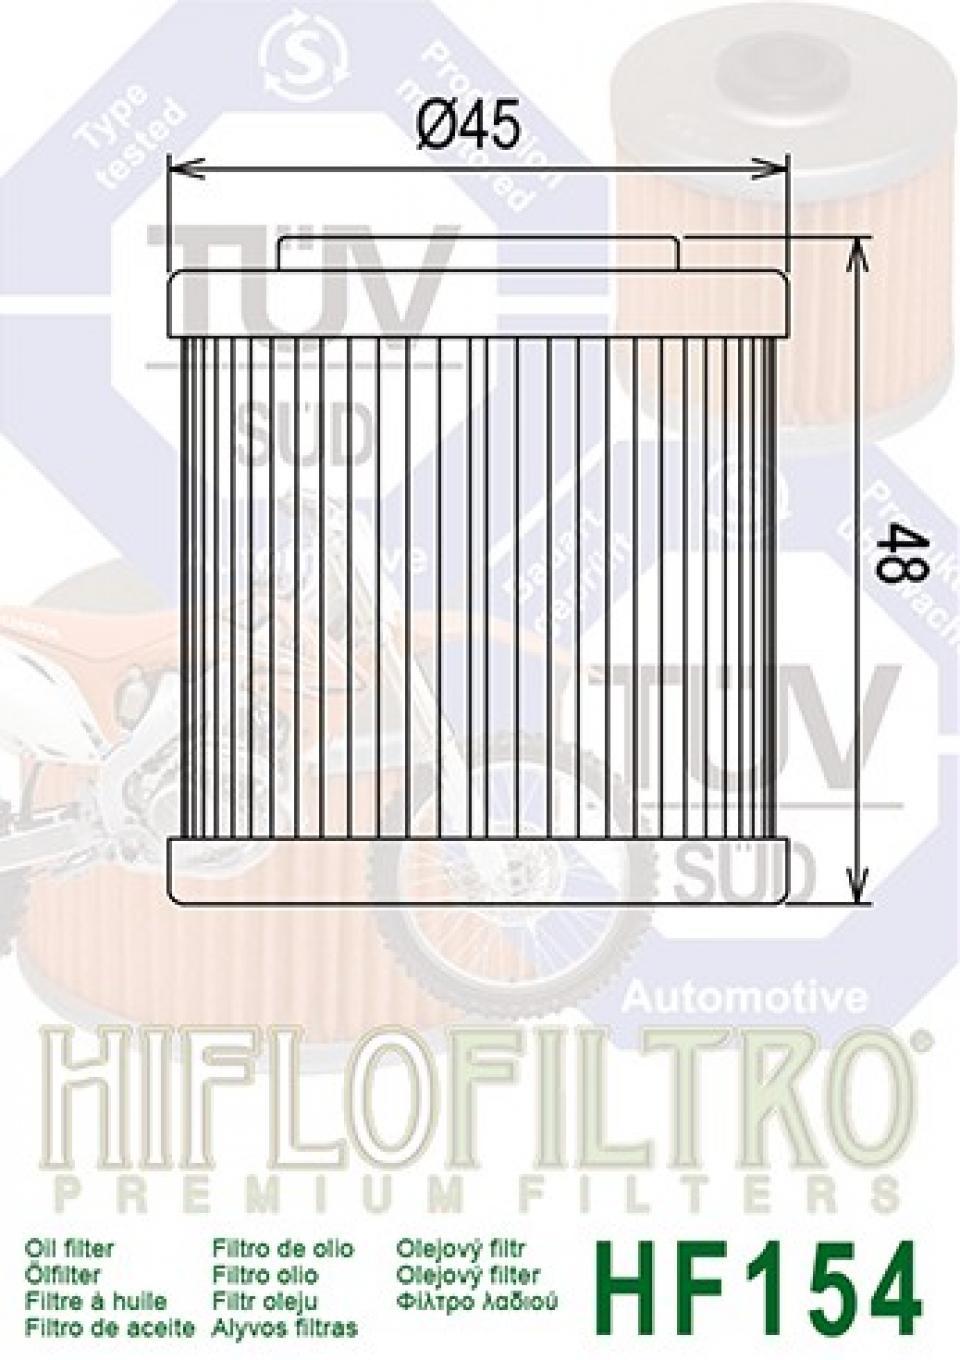 Filtre à huile Hiflo Filtro pour Moto Husqvarna 570 TC 2001-2004 Neuf